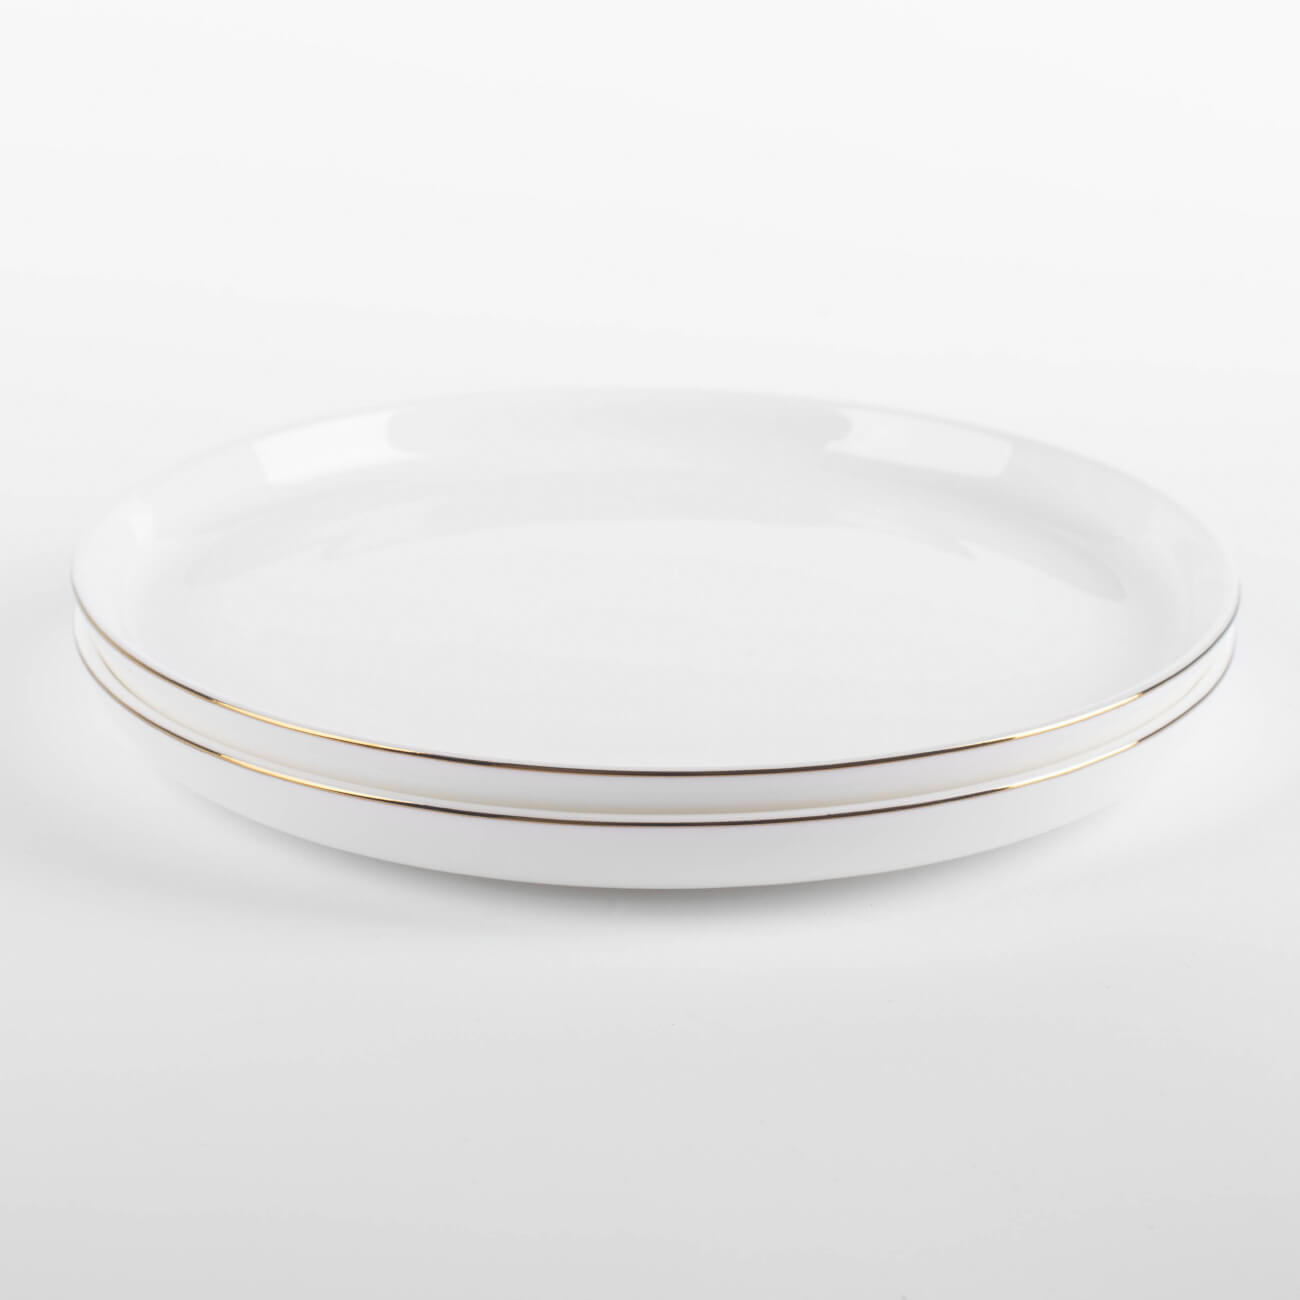 Тарелка десертная, 20 см, 2 шт, фарфор F, белая, Ideal gold десертная тарелка tescoma